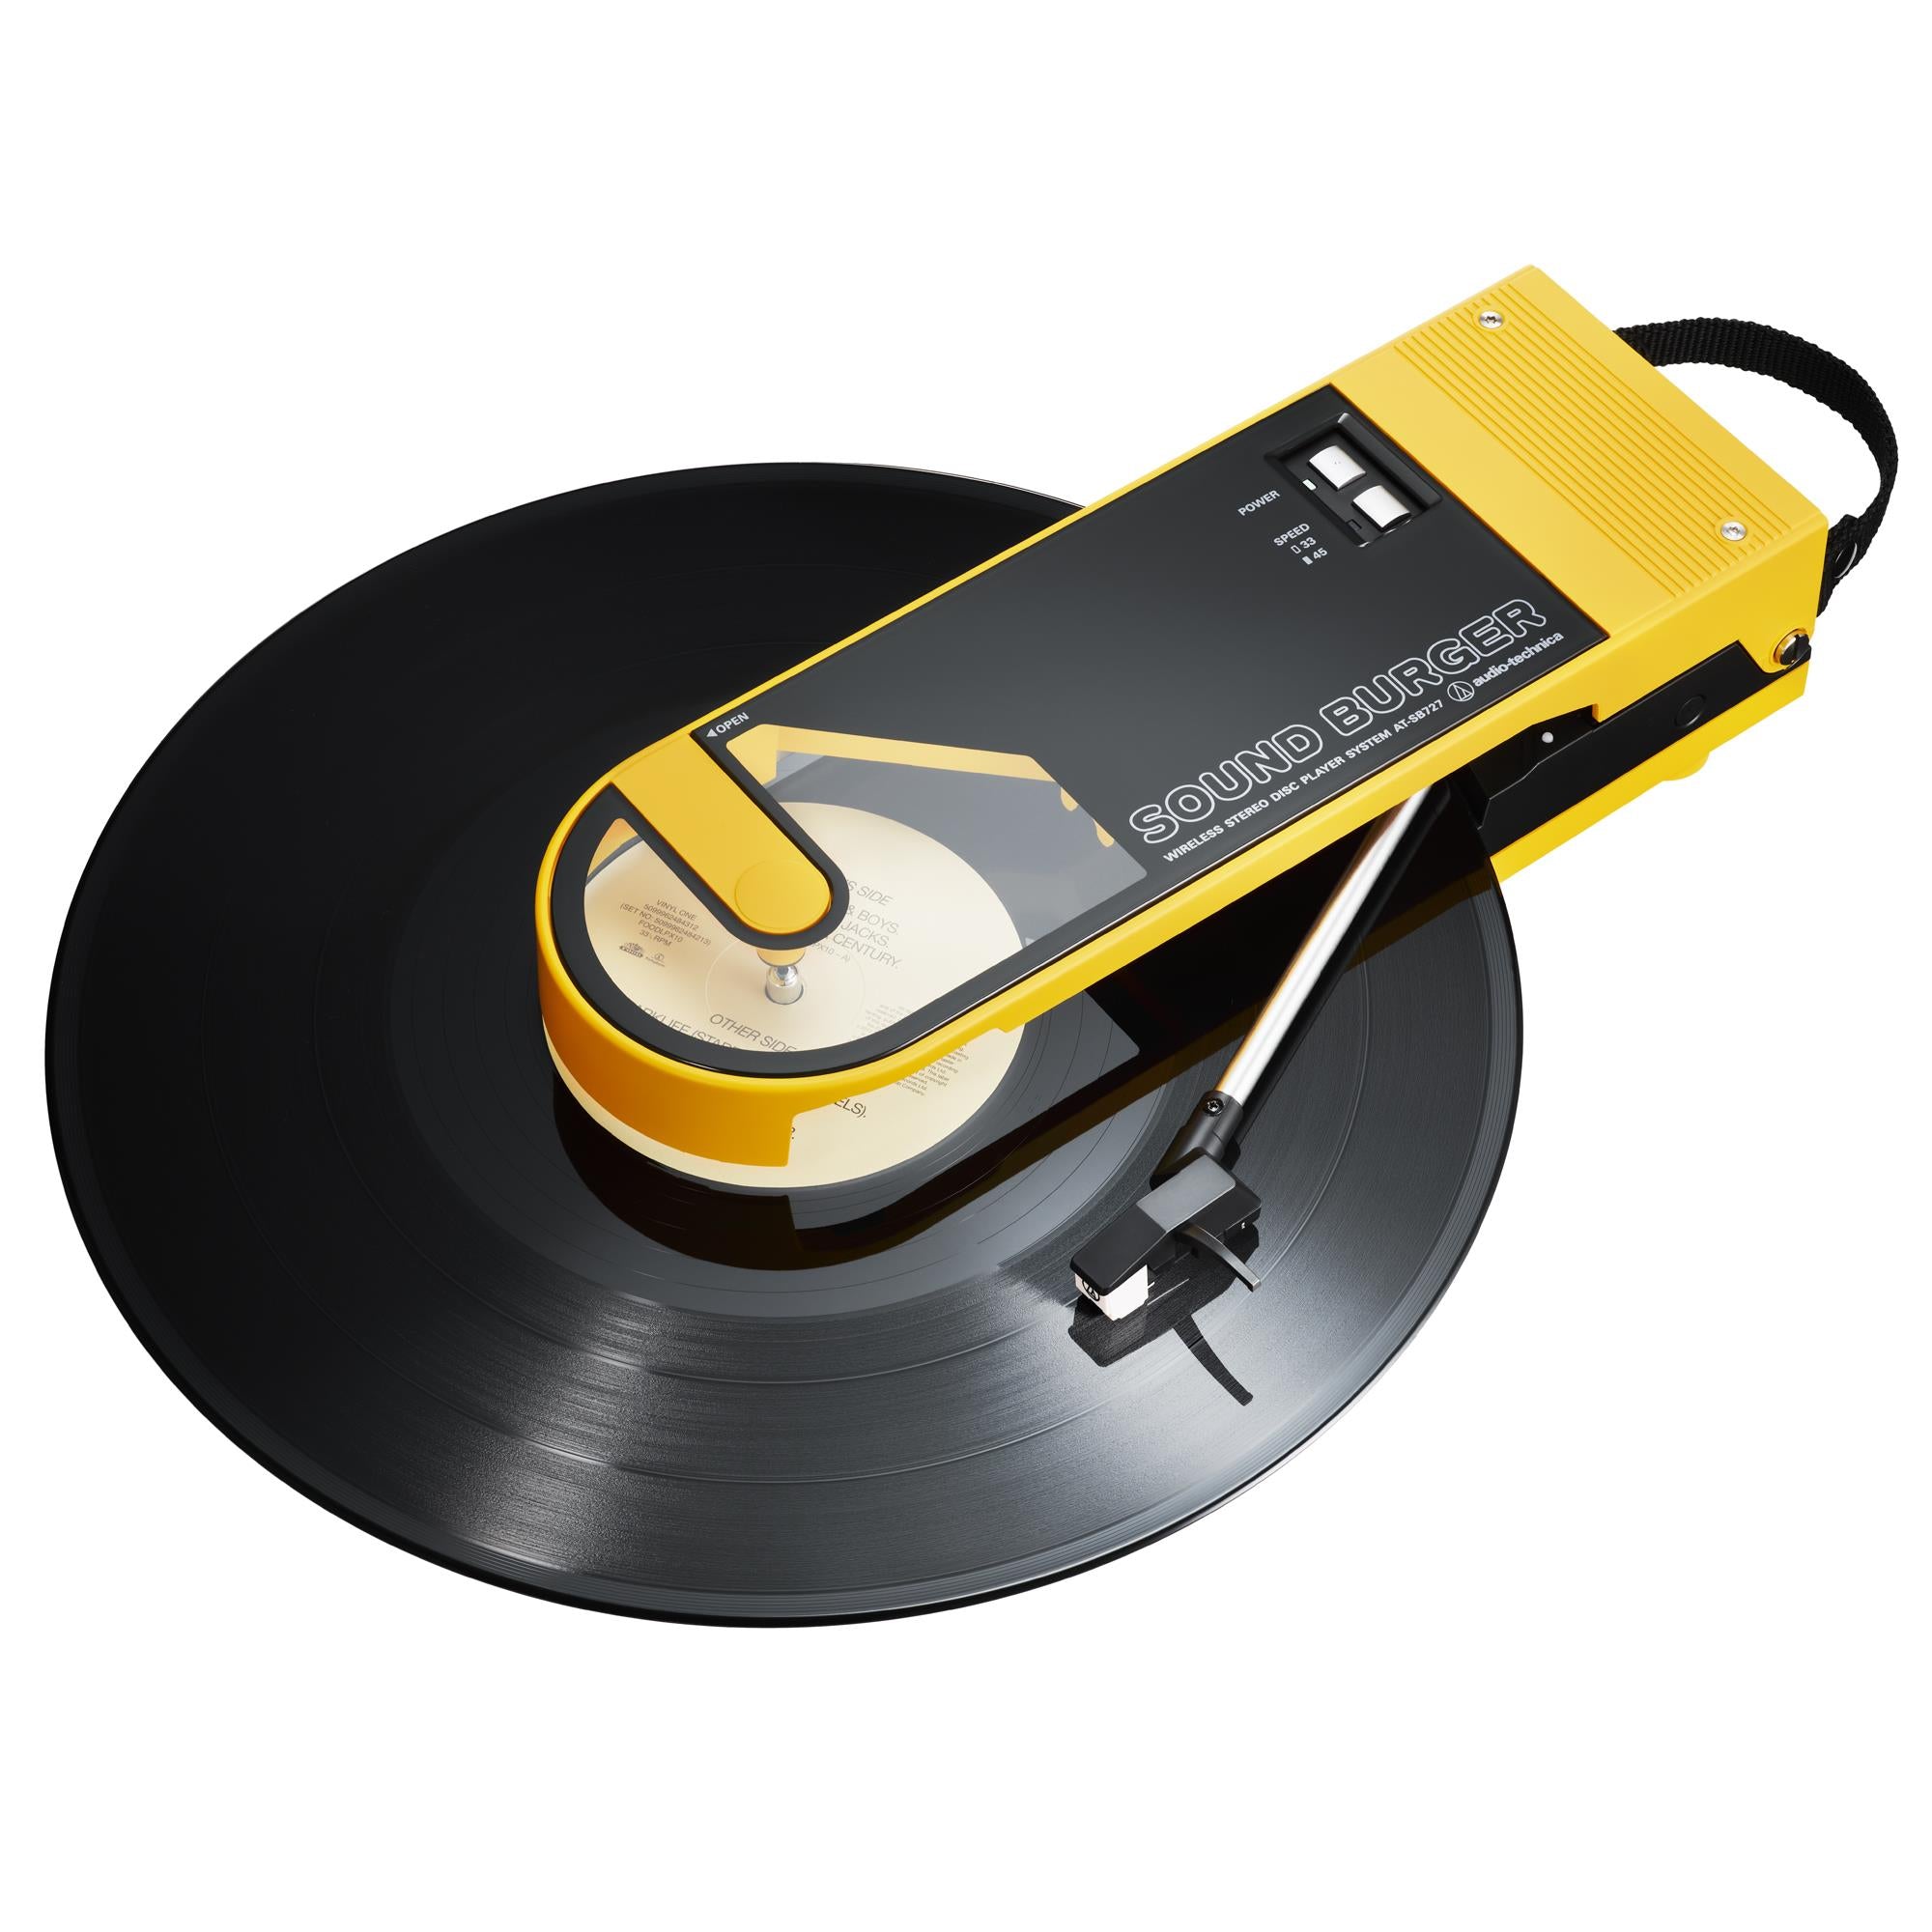 audio tecnica atsb727 sound burger portable bluetooth turntable (yellow)